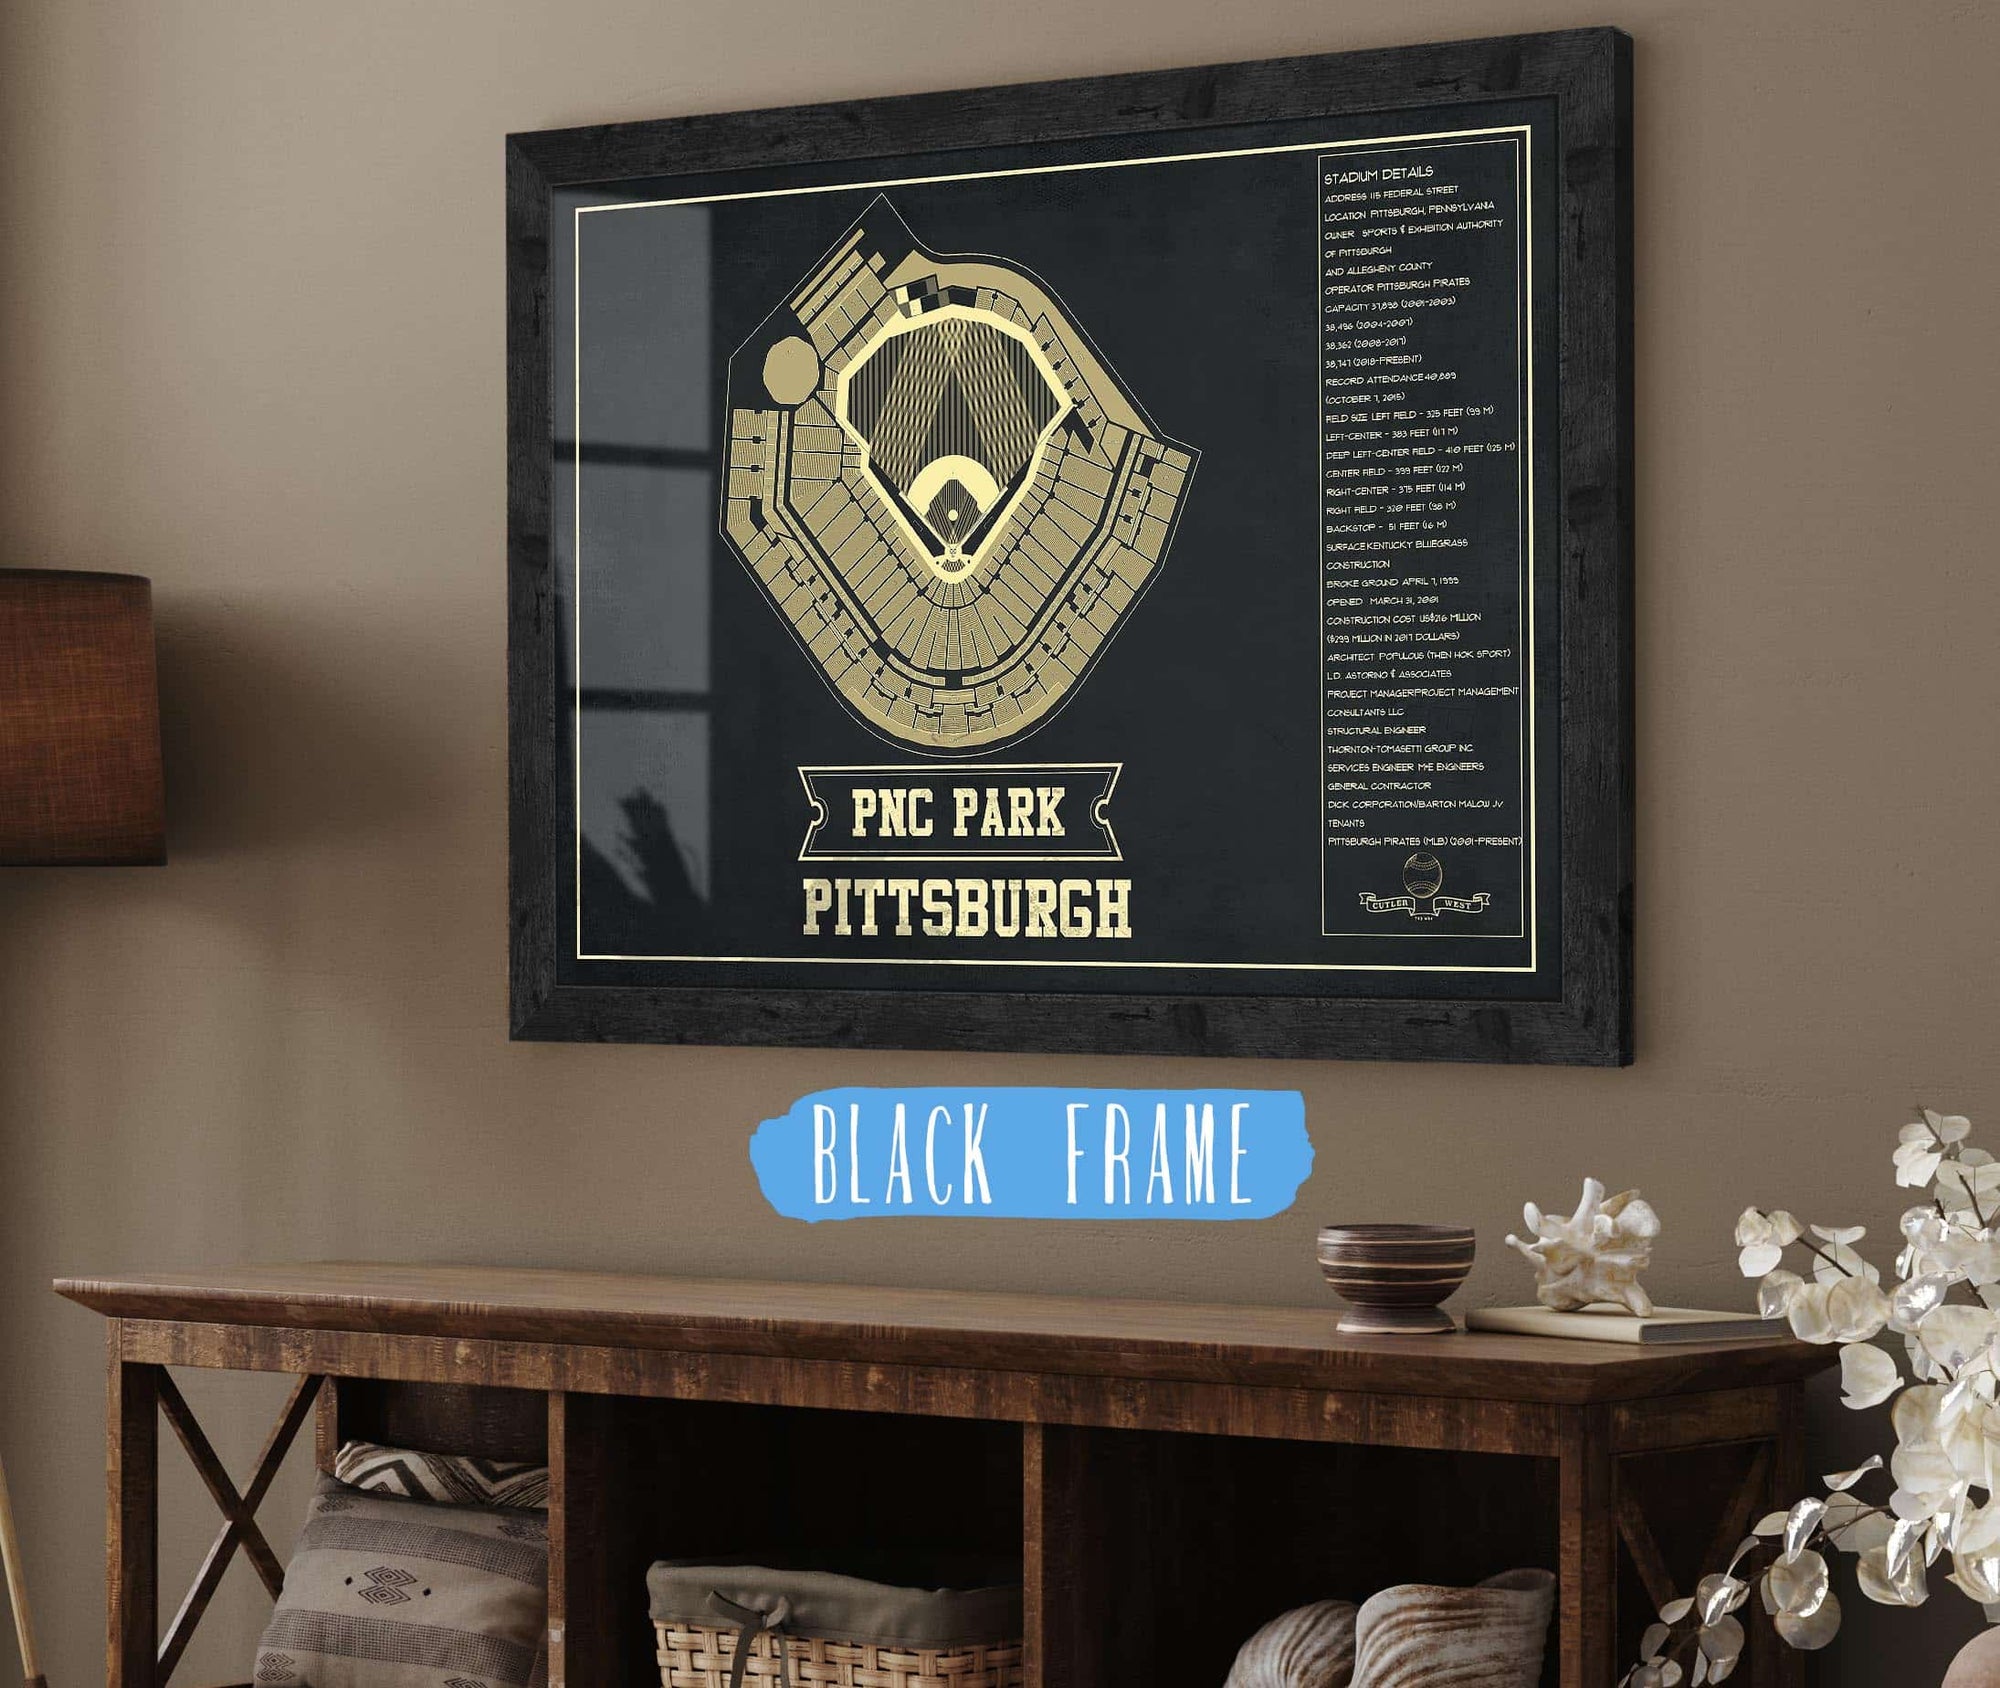 PNC Park - Pittsburgh Pirates Art Print - the Stadium Shoppe